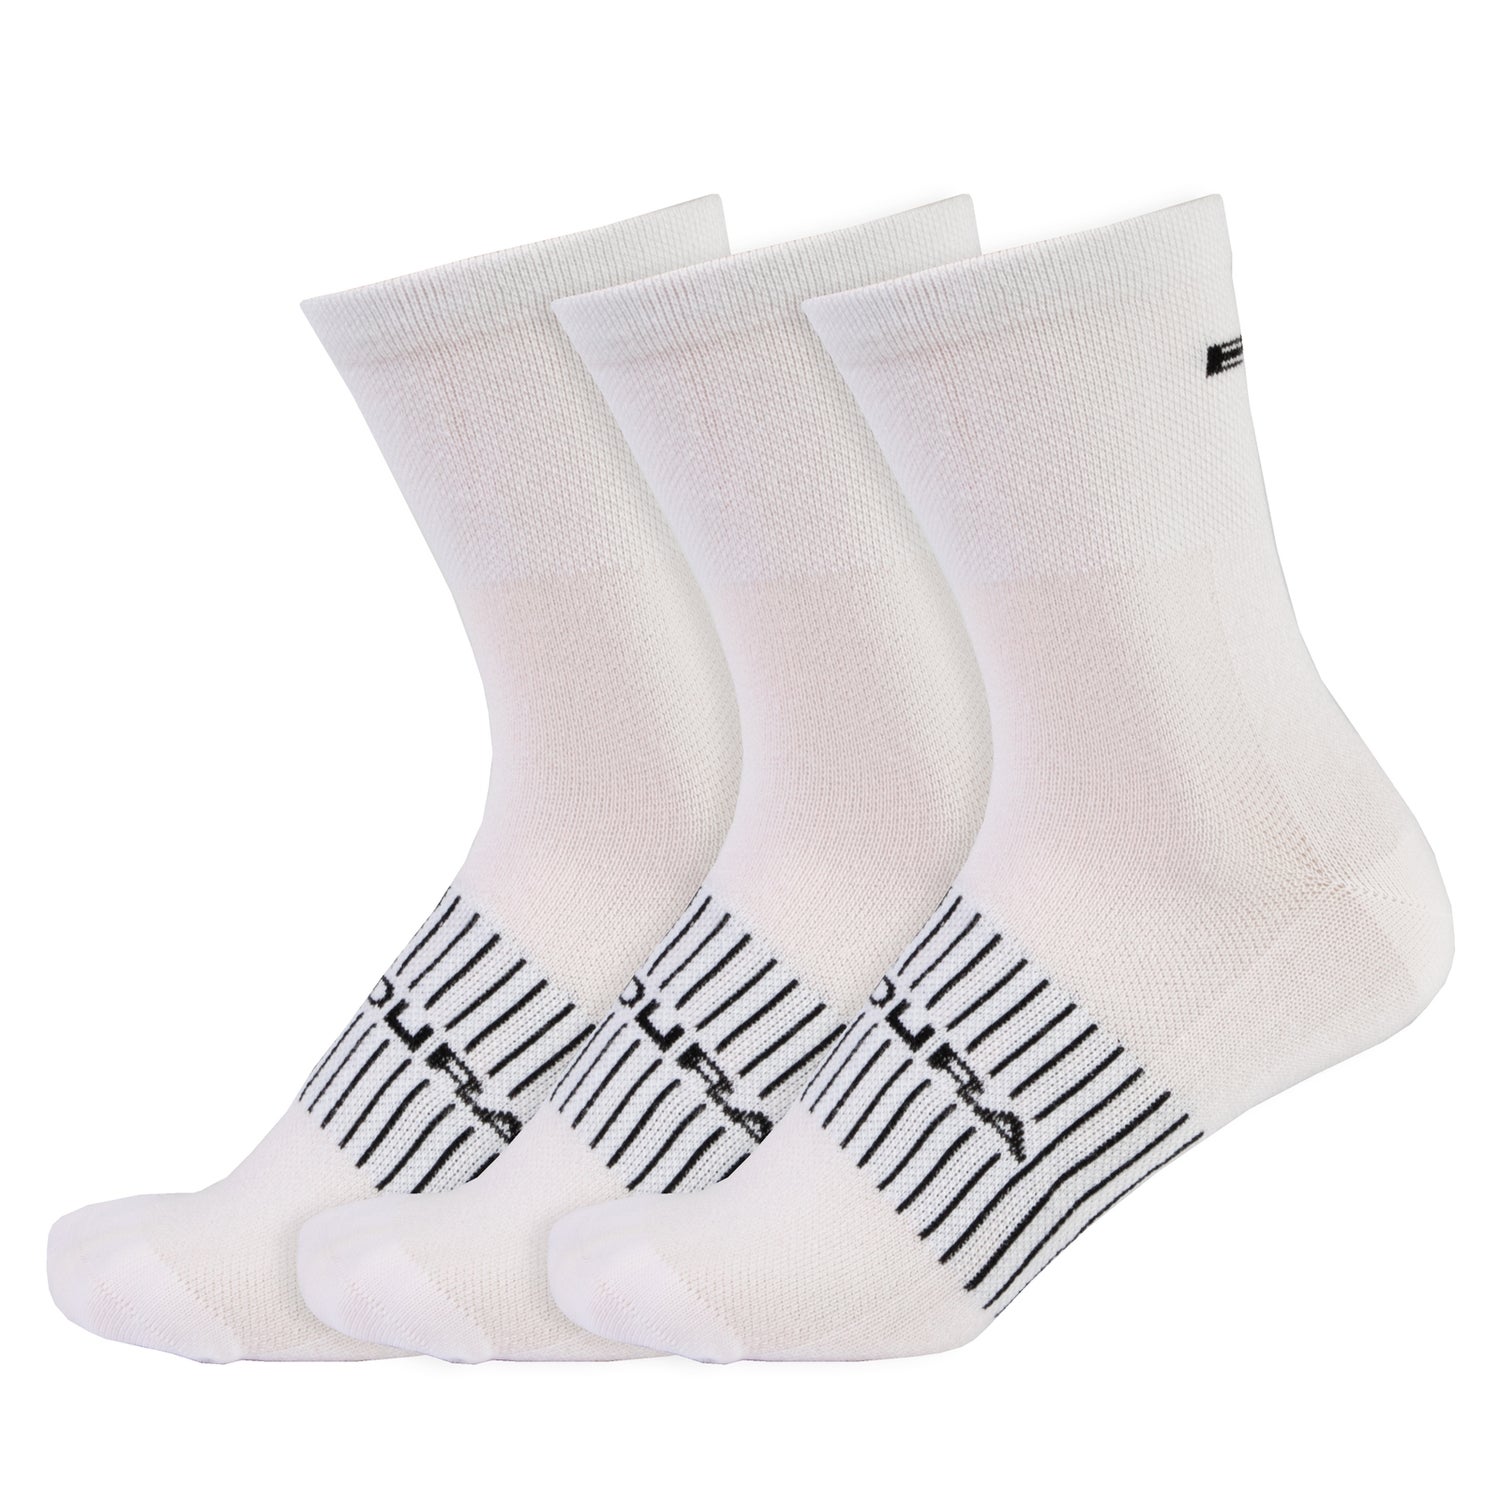 Men's Coolmax® Race Sock (Triple Pack) - White - L-XL